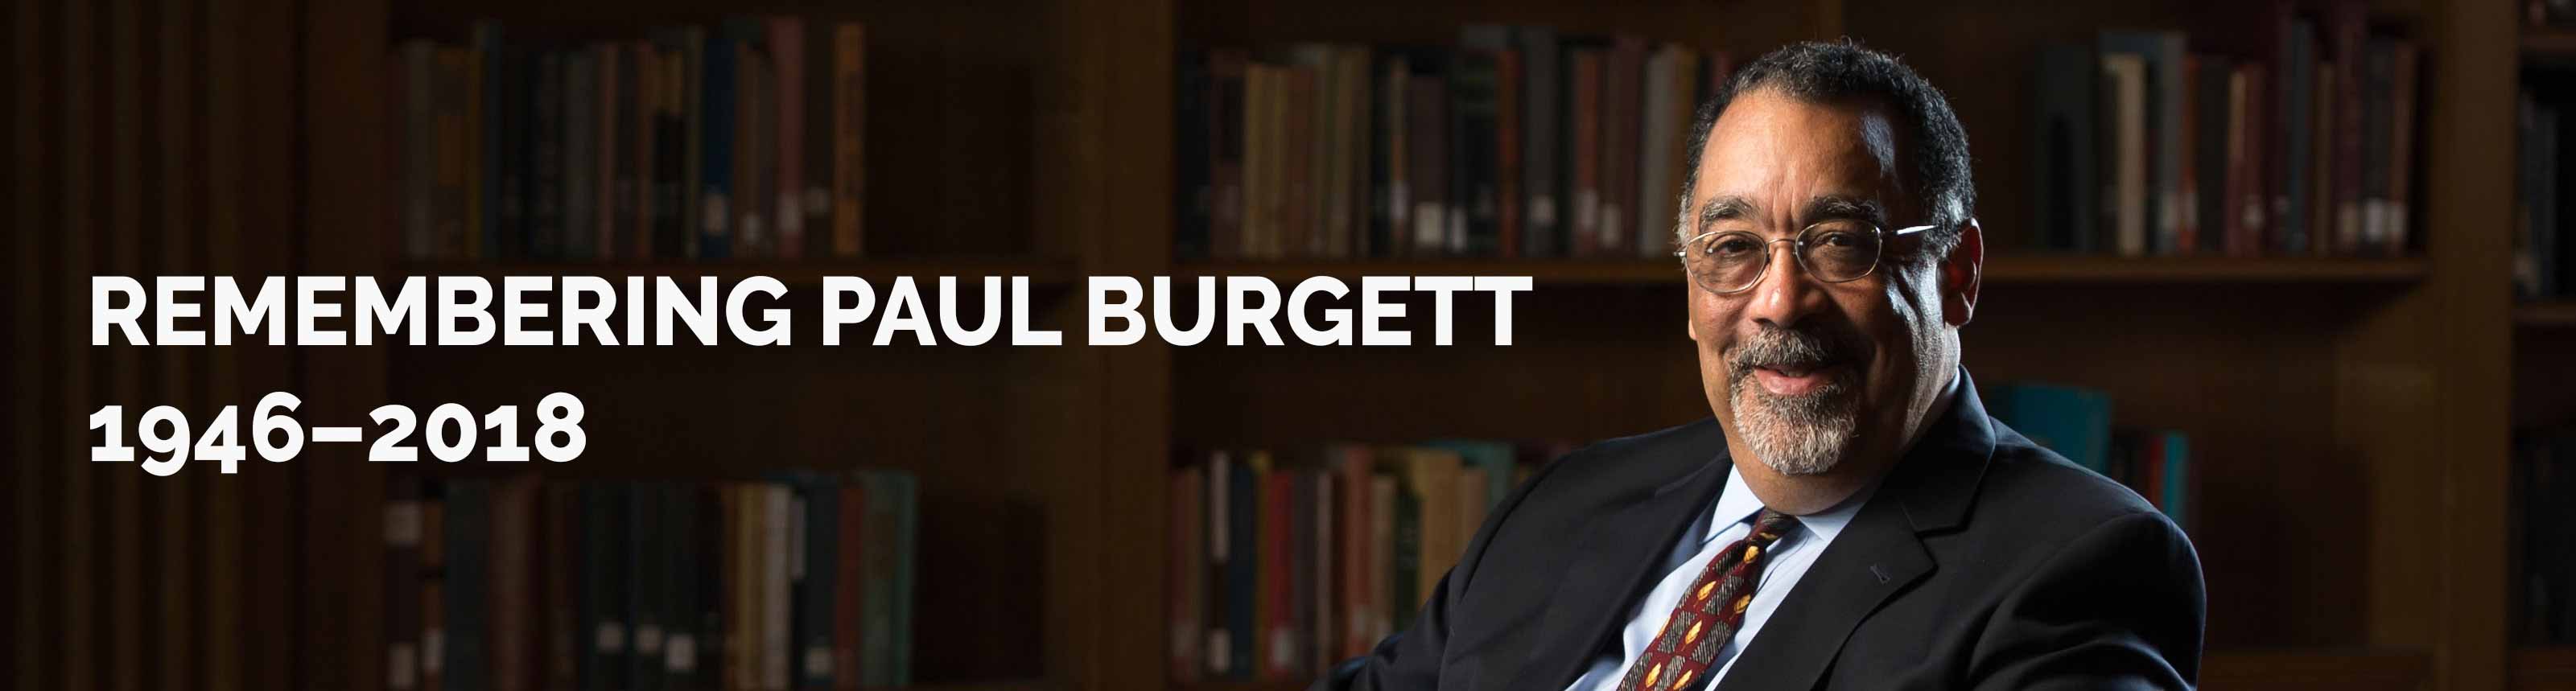 portrait of Paul Burgett with heading REMEMBERING PAUL BURGETT 1946-2018